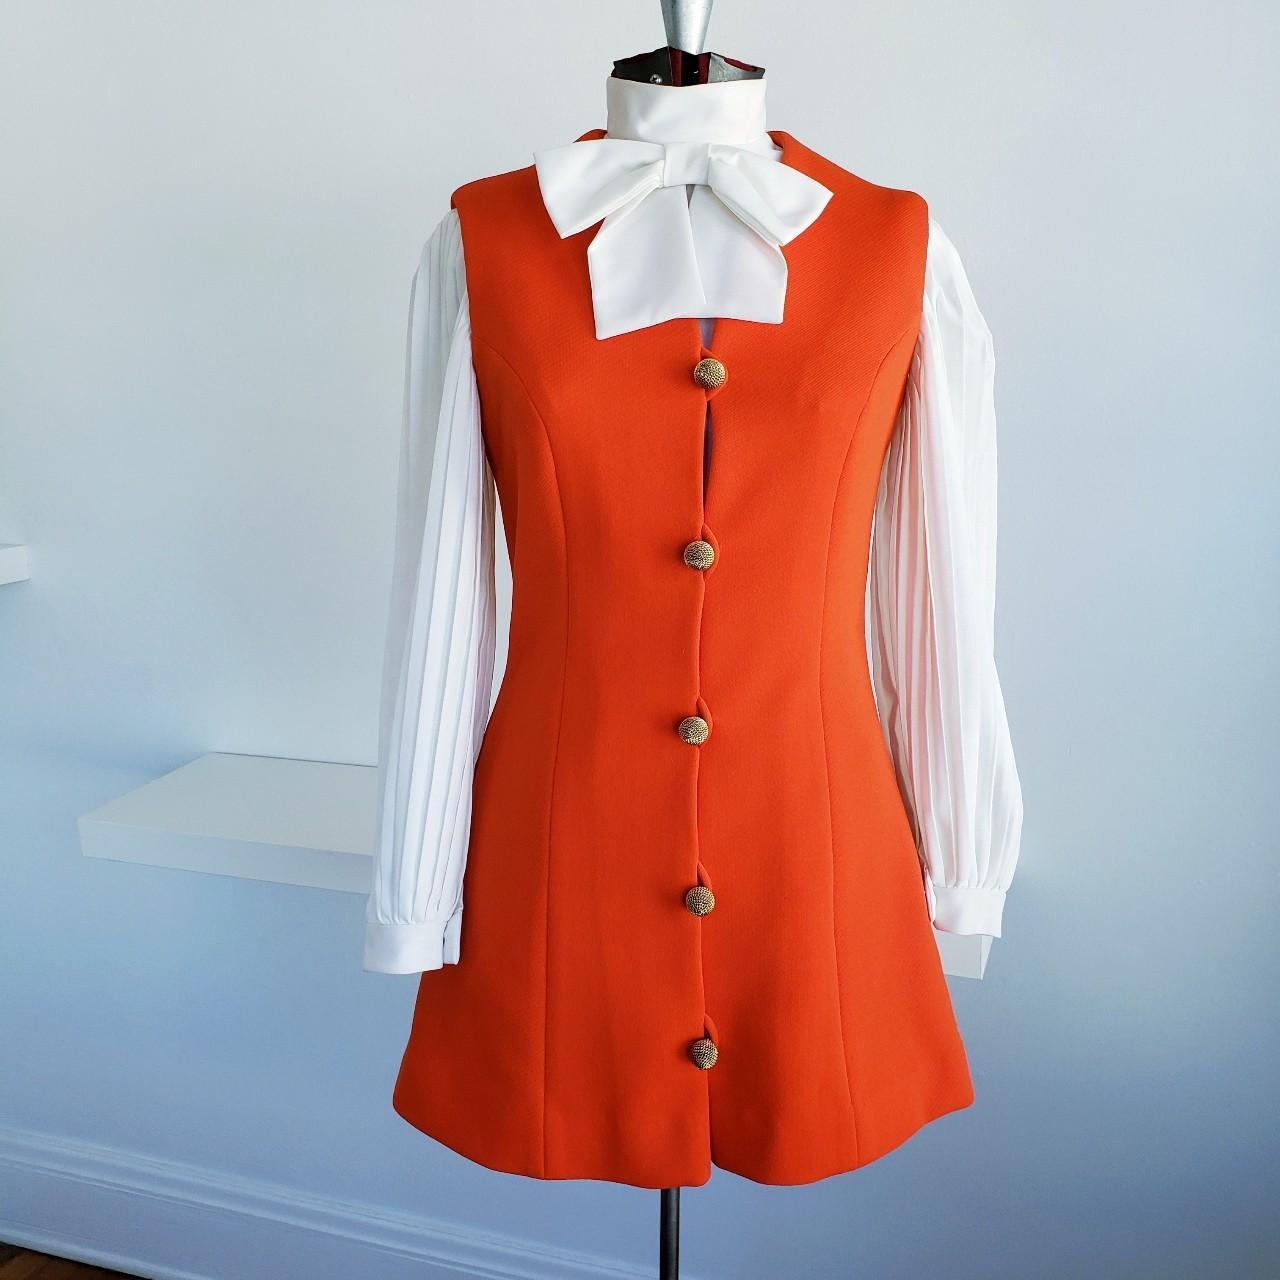 American Vintage Women's White and Orange Suit